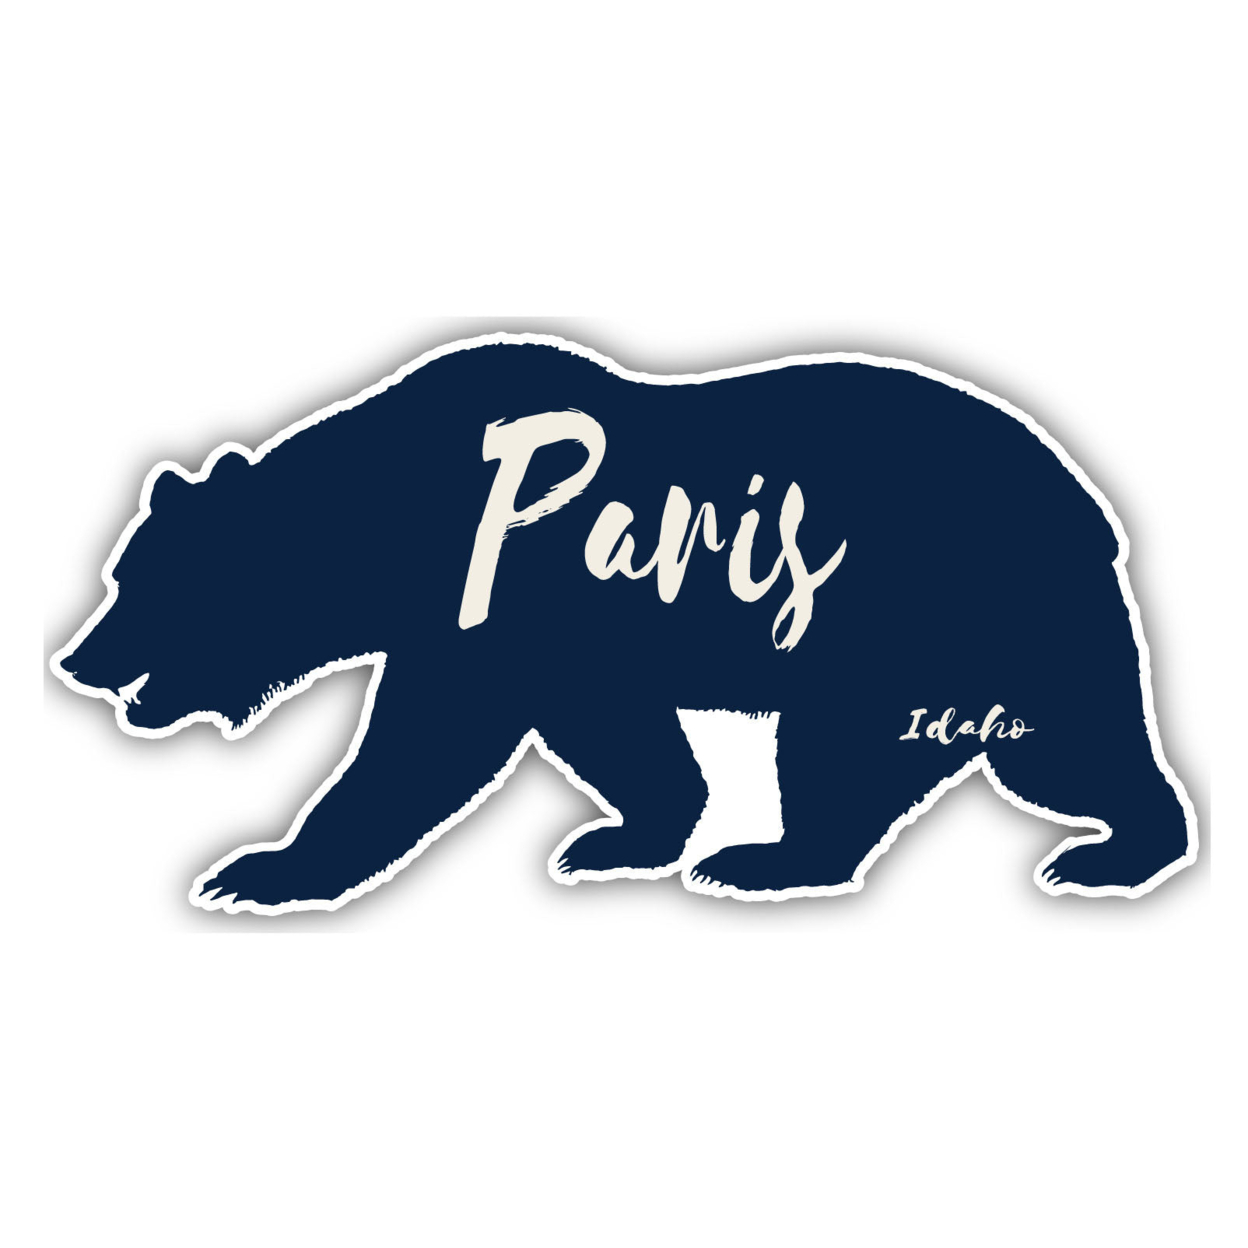 Paris Idaho Souvenir Decorative Stickers (Choose Theme And Size) - Single Unit, 4-Inch, Bear